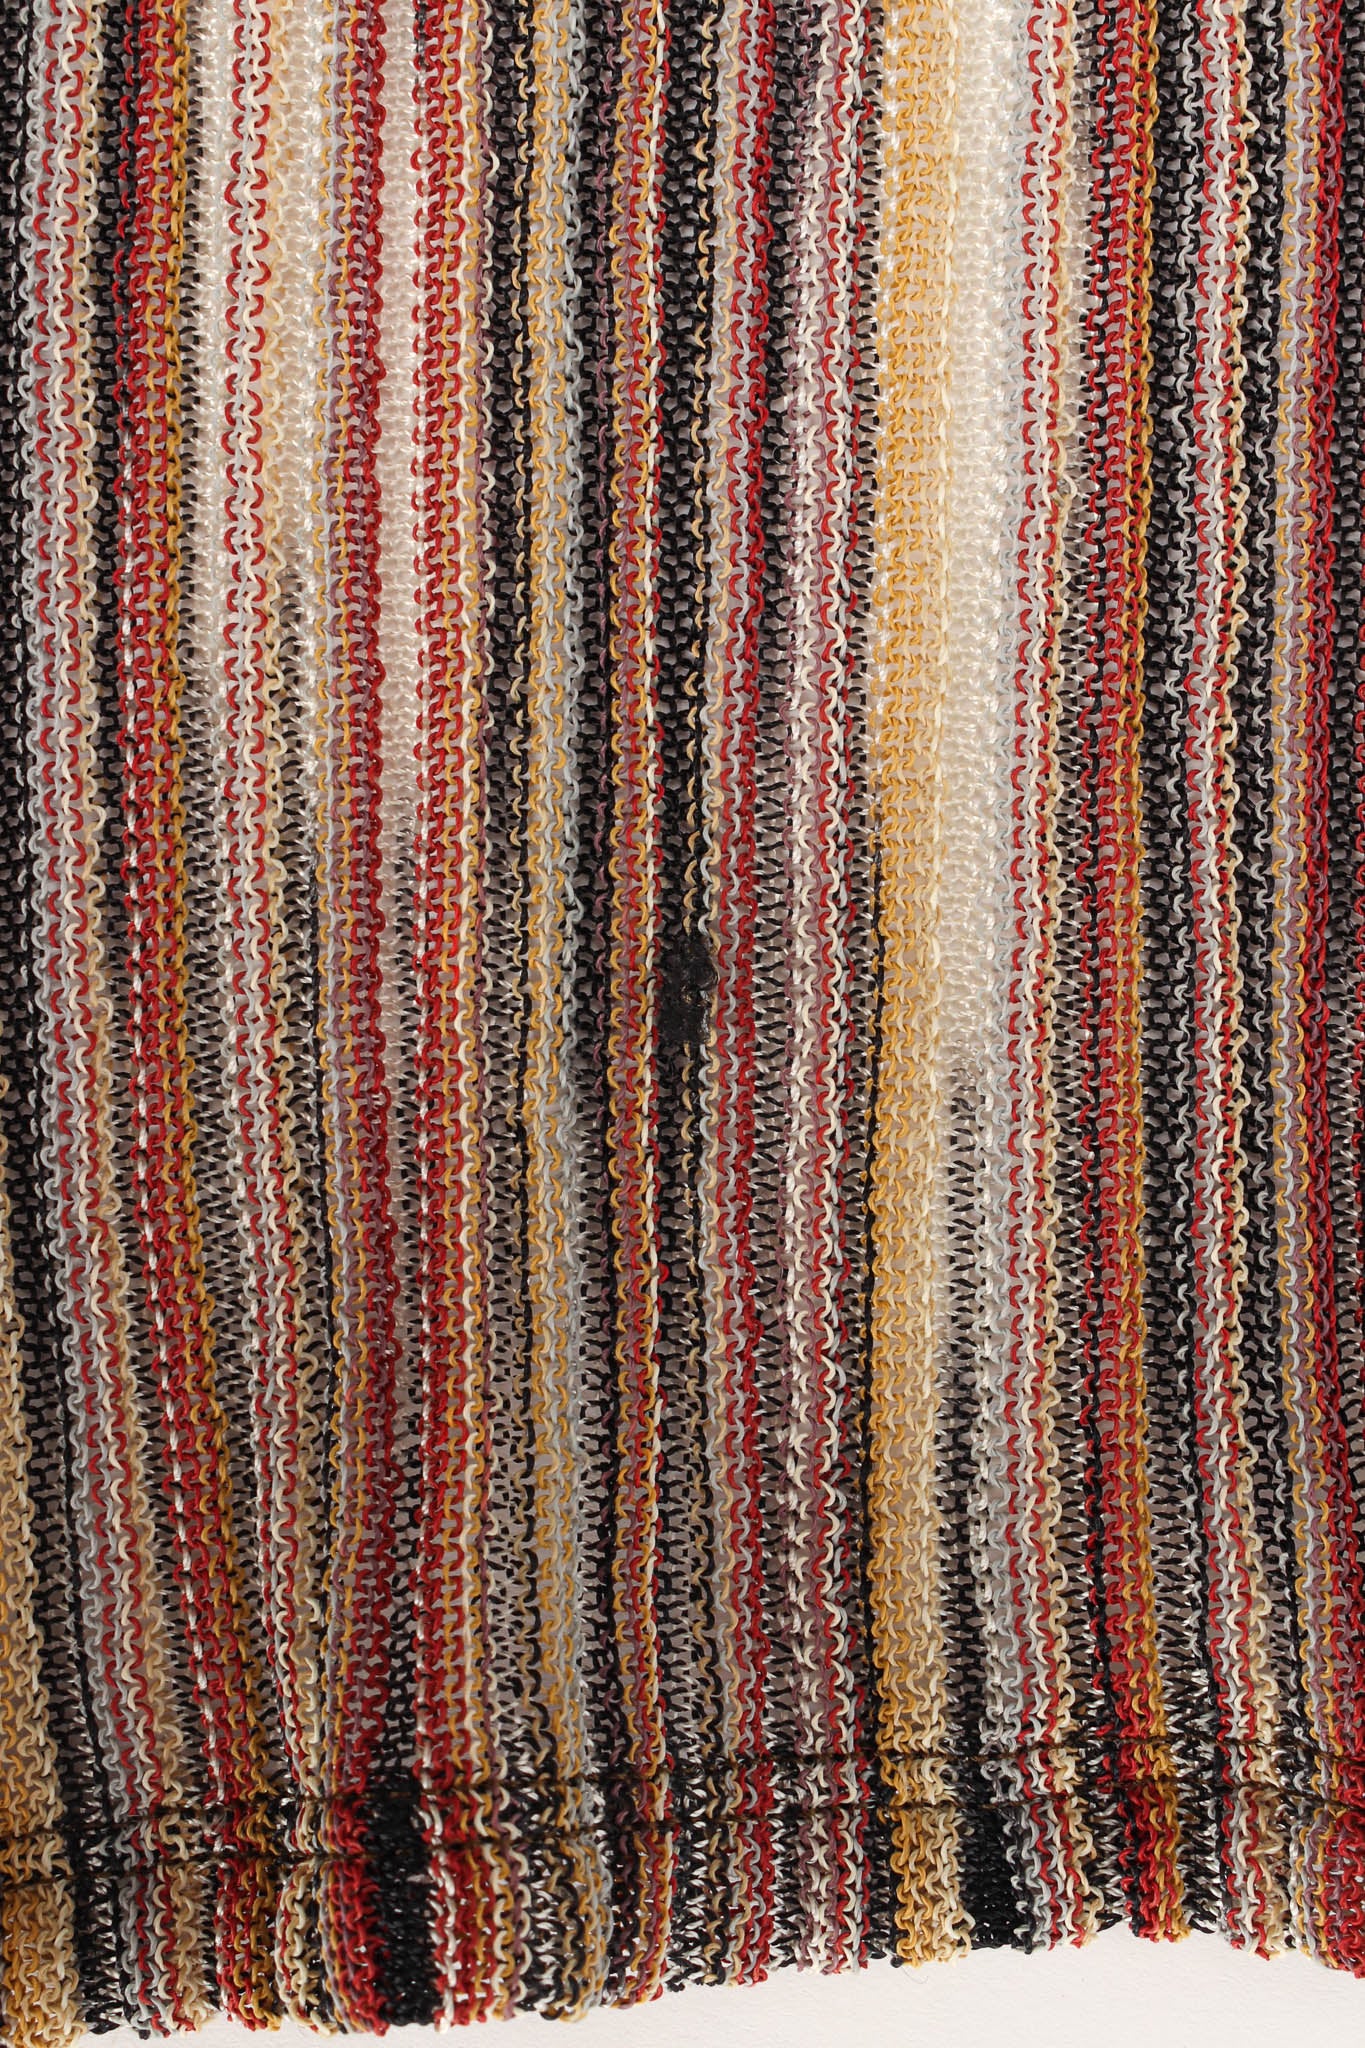 Vintage Missoni Chevron Stripe Top, & Skirt (4 Piece Set) fabric snag @ Recess LA